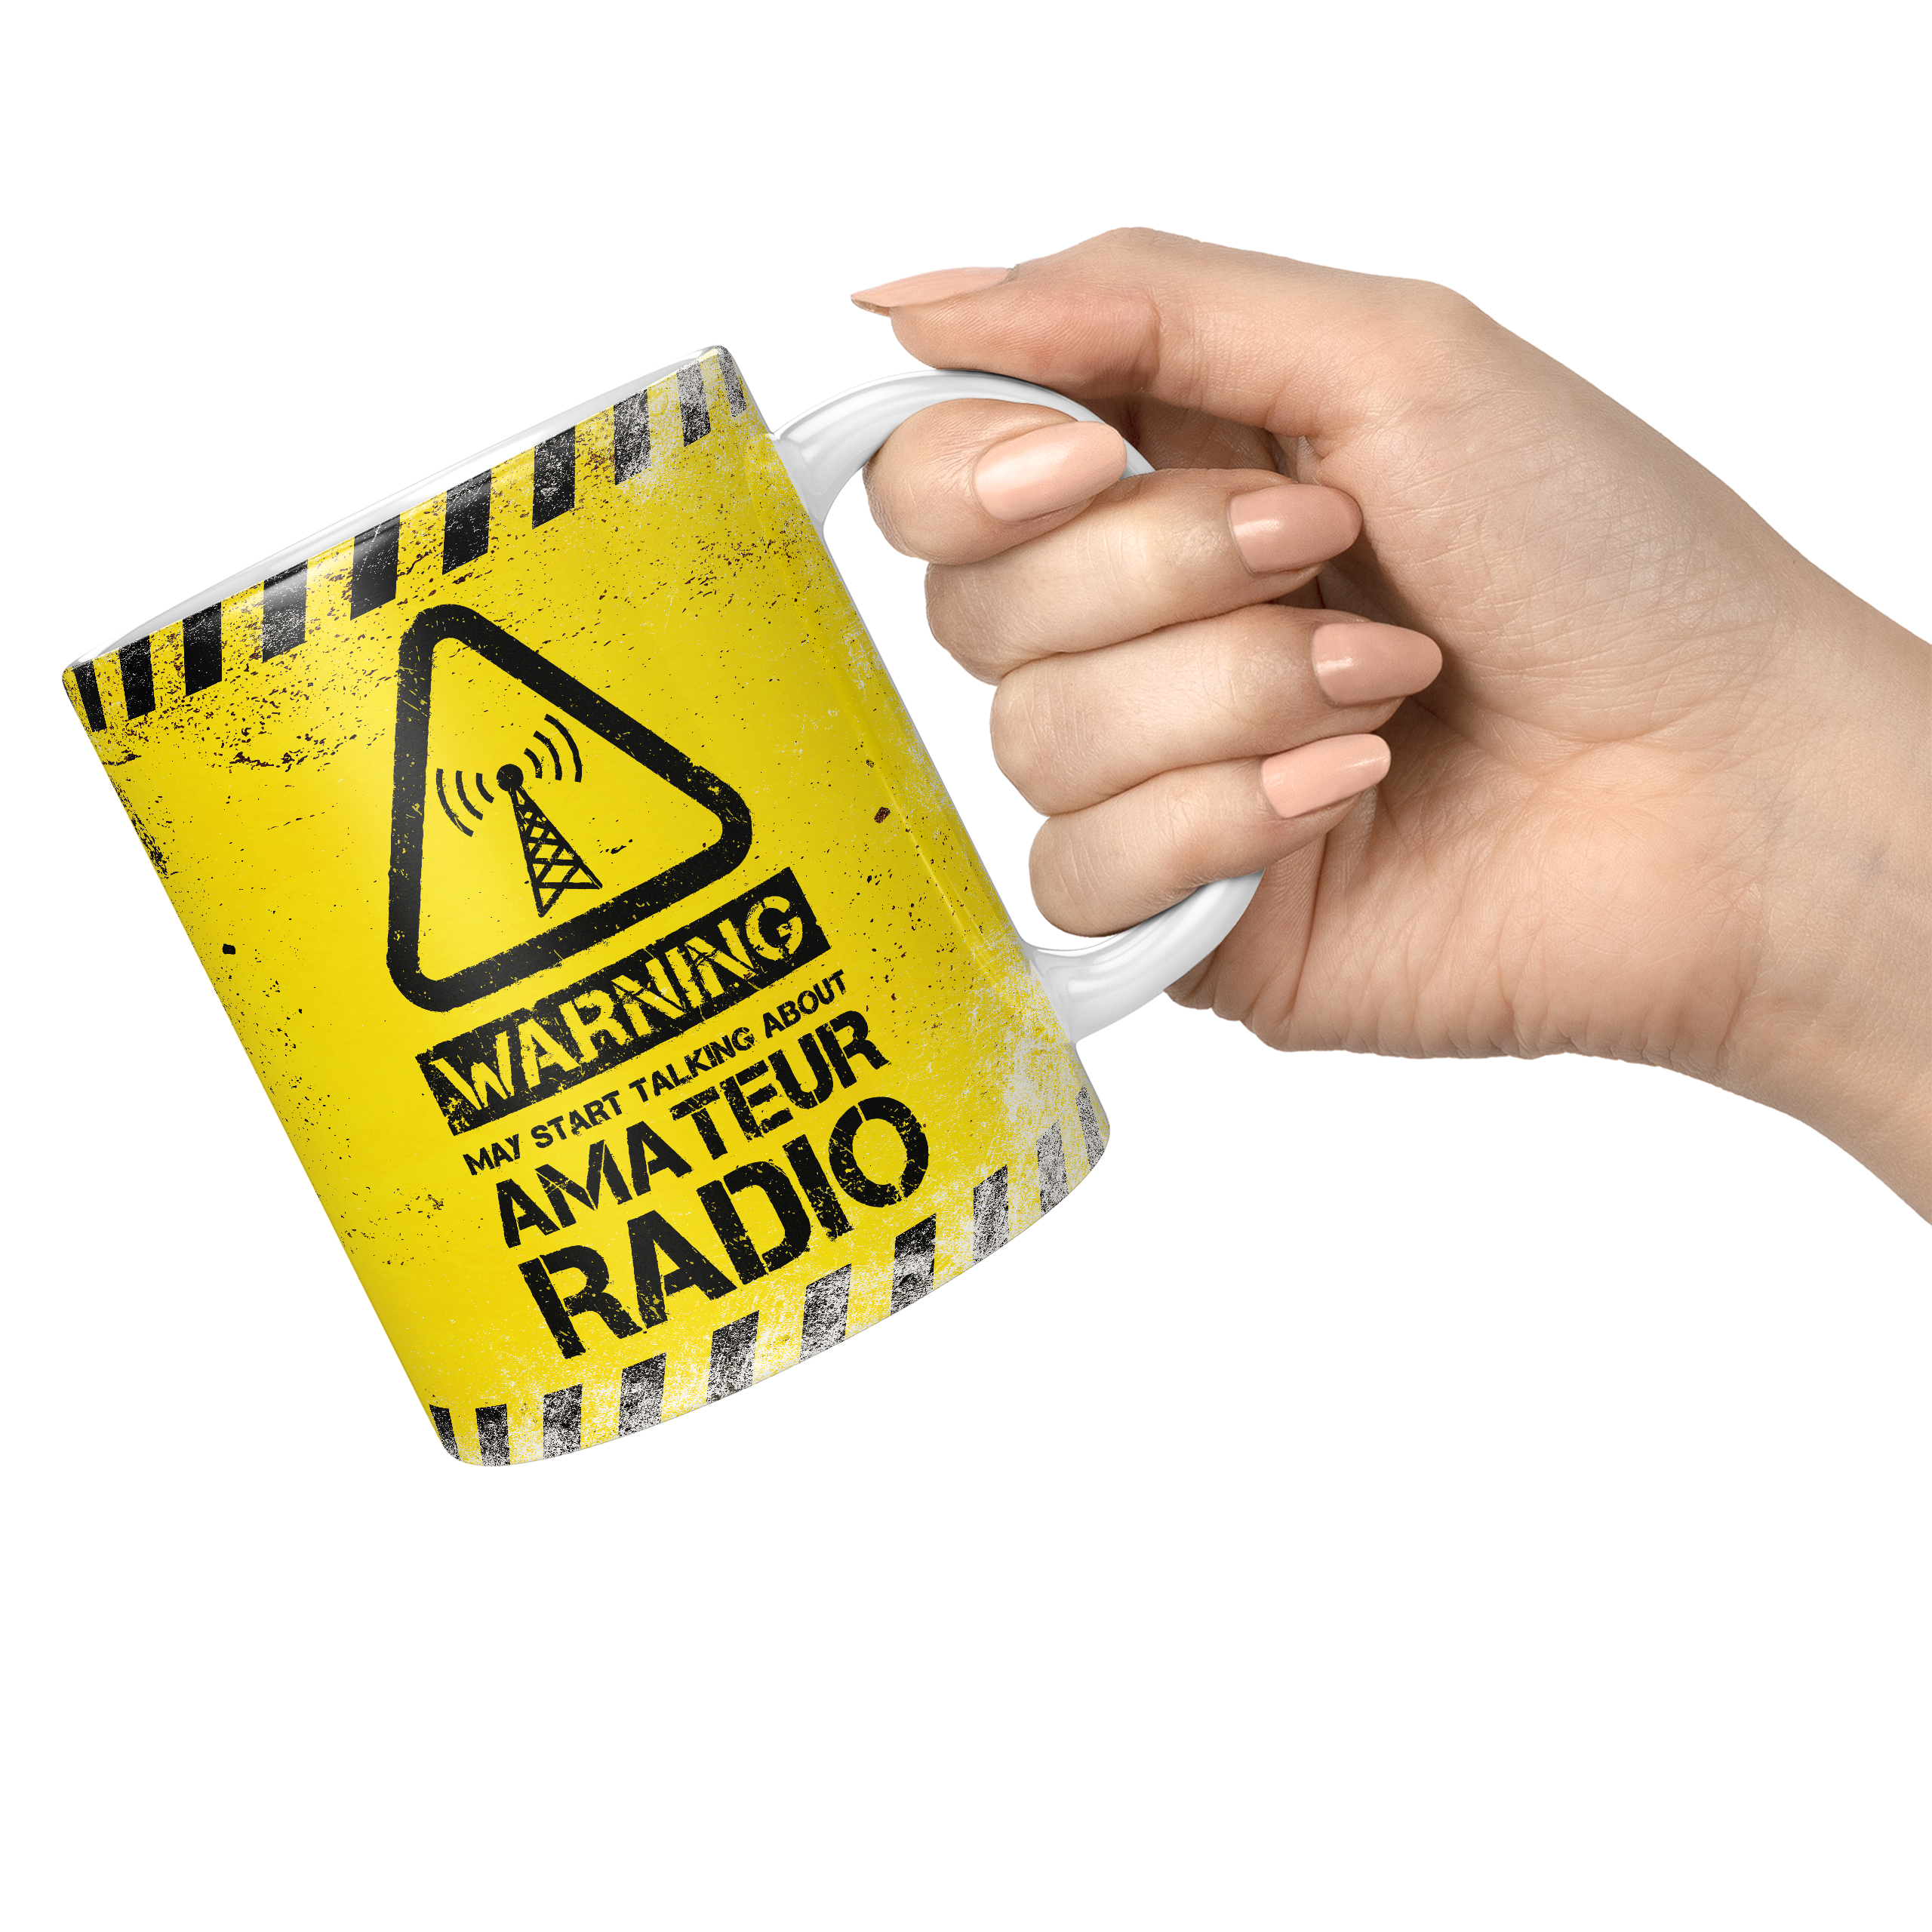 WARNING MAY START TALKING ABOUT AMATEUR RADIO 11oz NOVELTY MUG Mugs